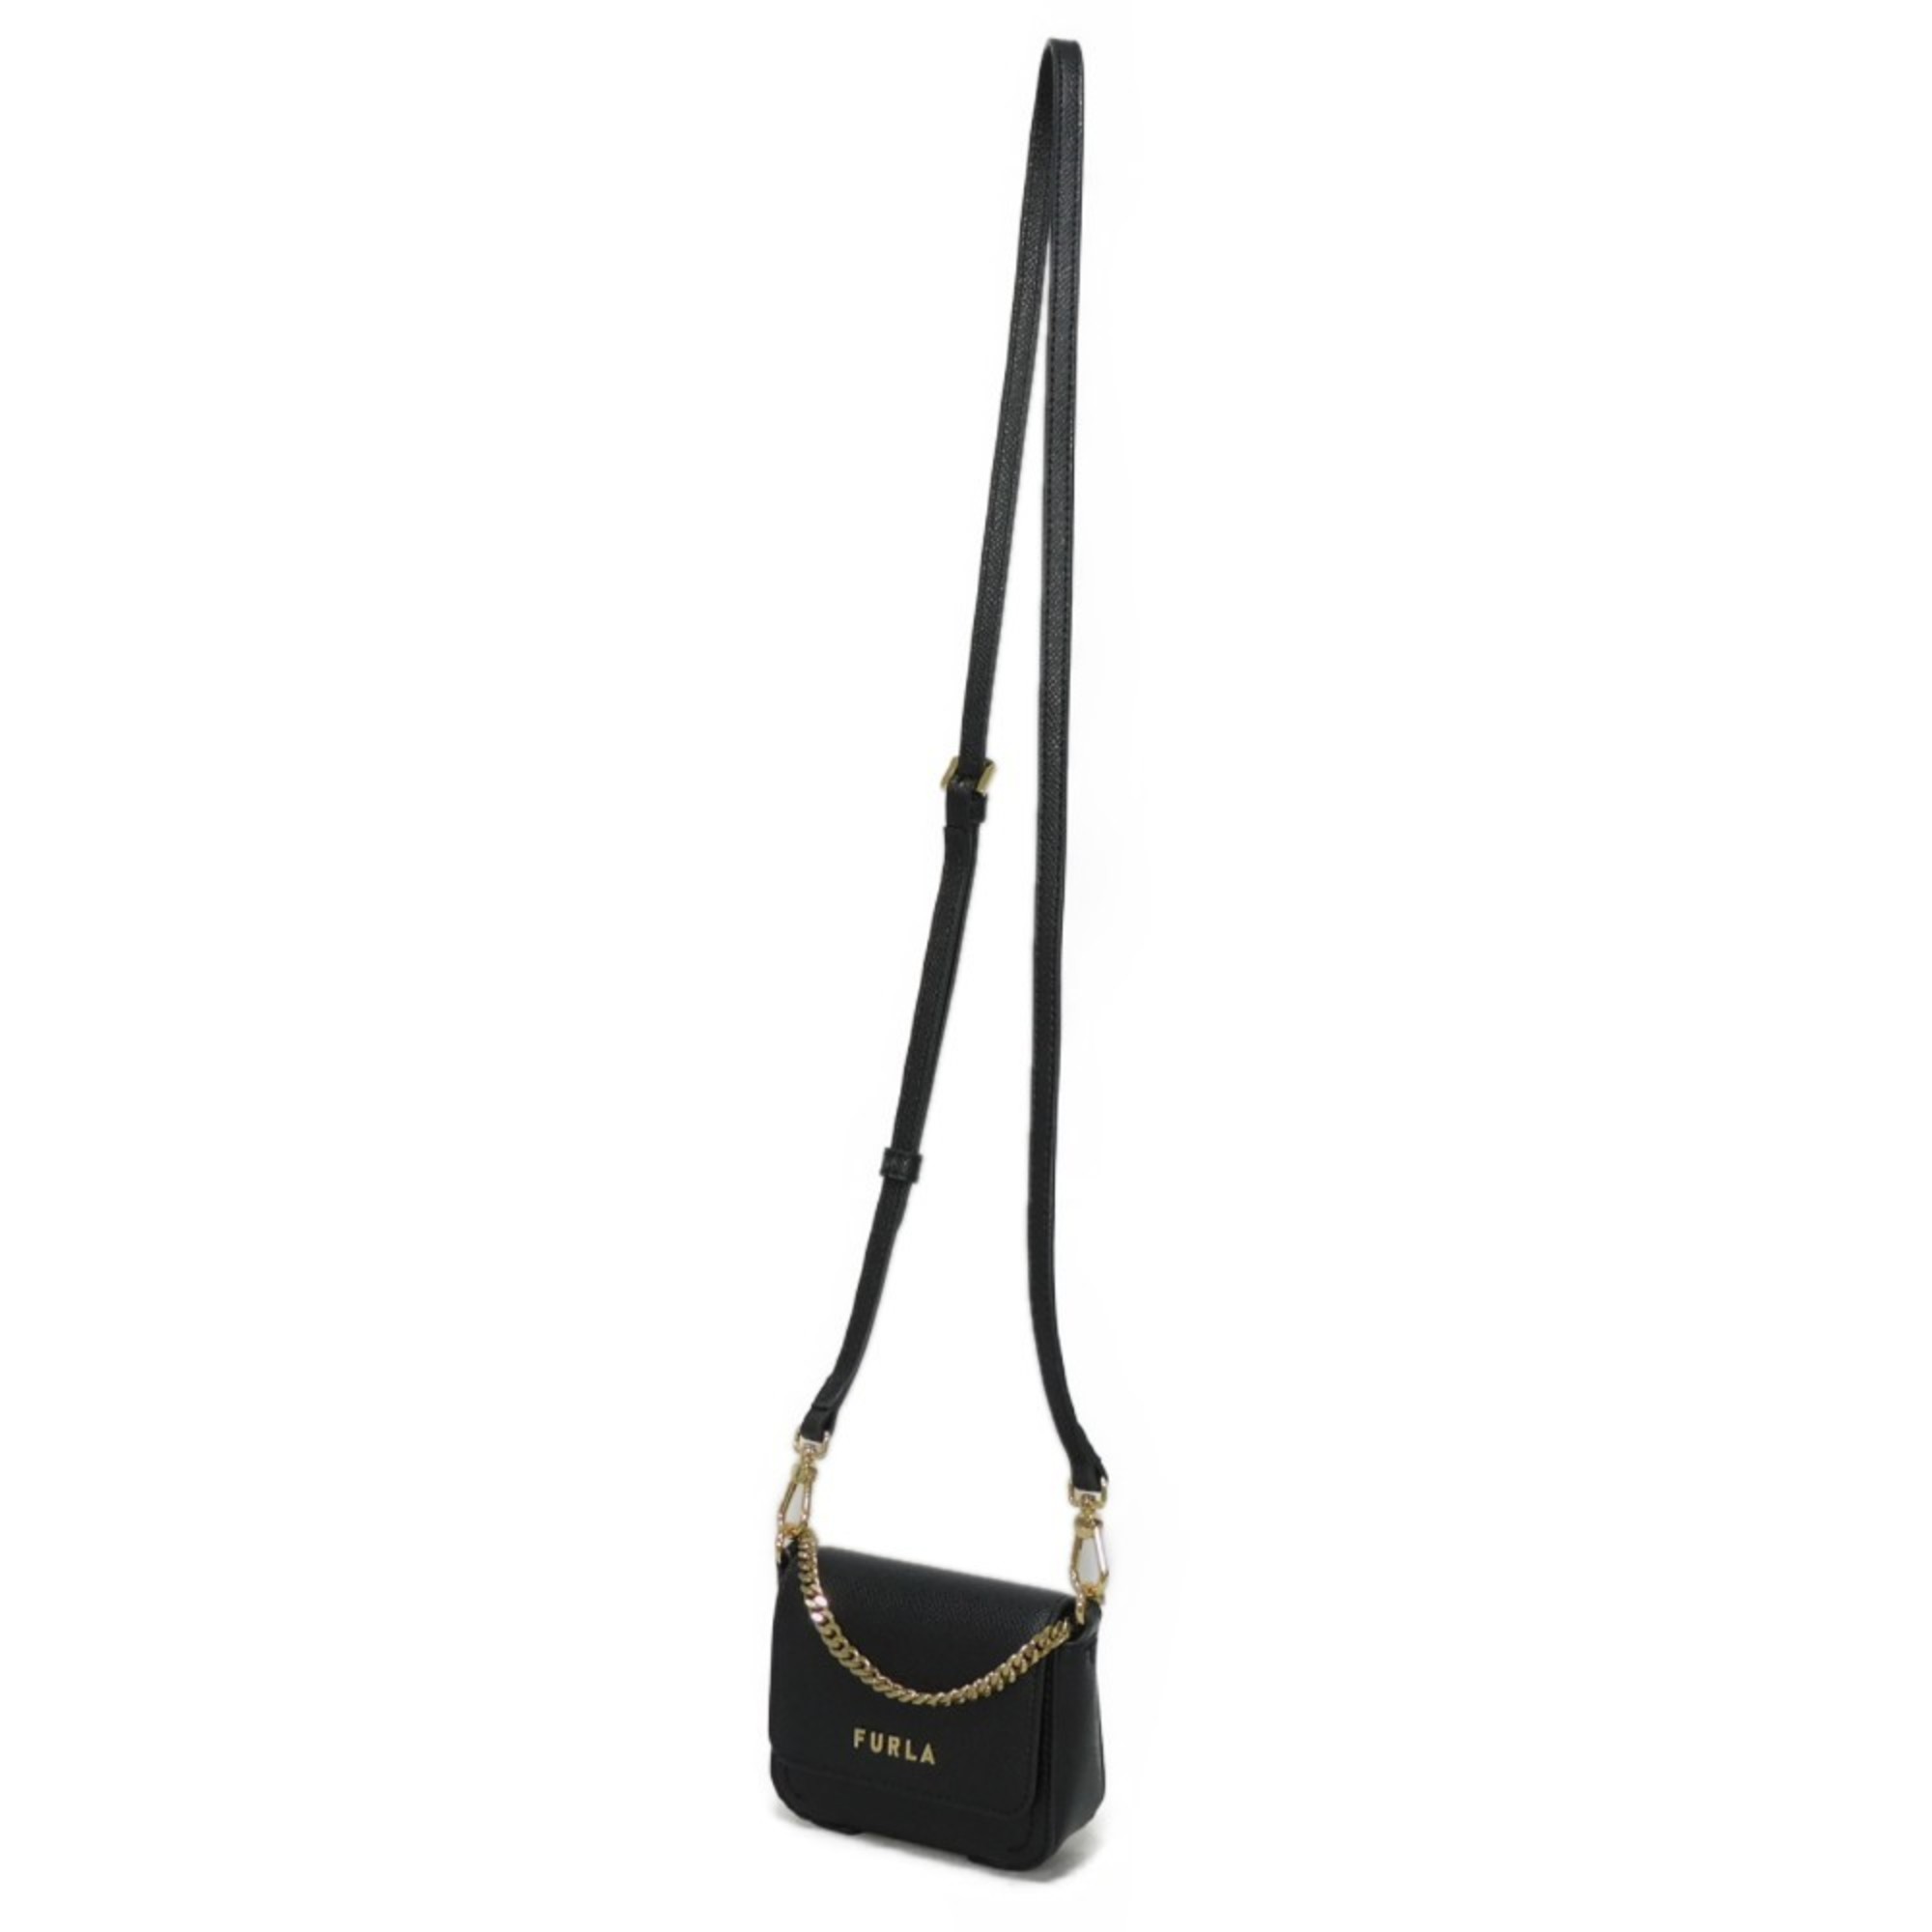 Furla Shoulder Bag Maya Pochette Chain Metal Black WE00229 Women's